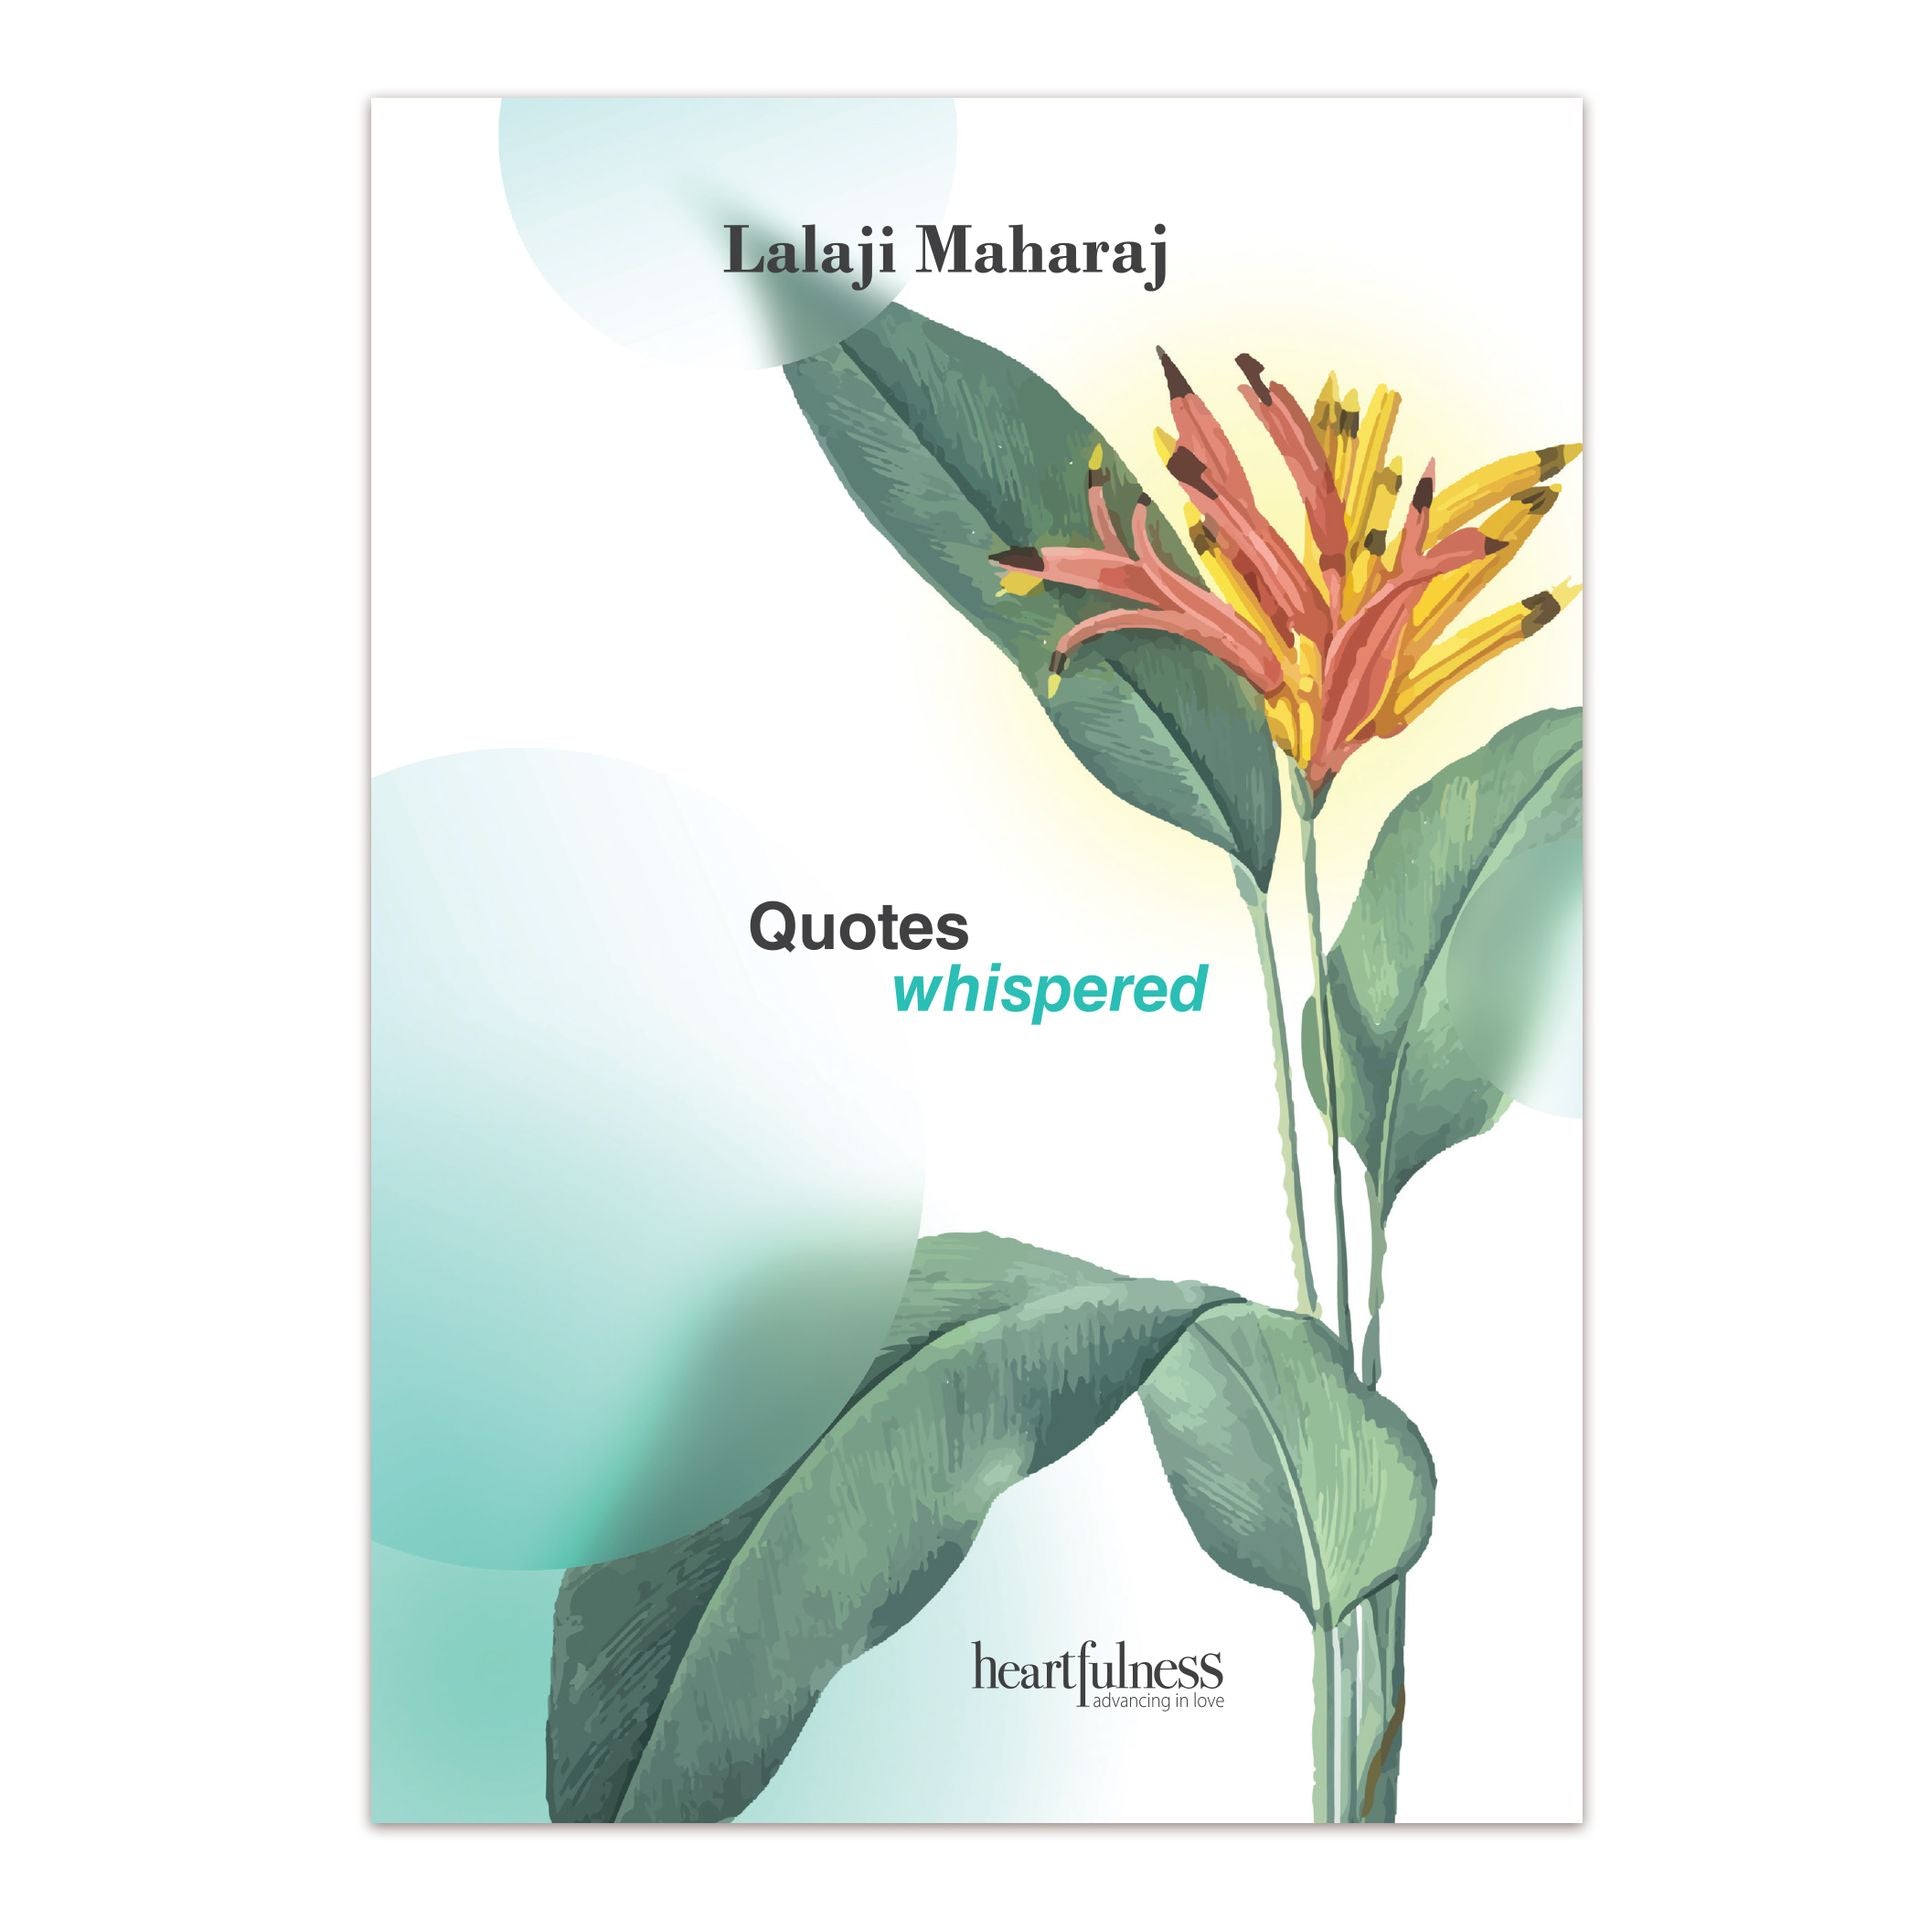 Precious Quotes of Lalaji Maharaj Whispers 1 through 4 - hfnl!fe